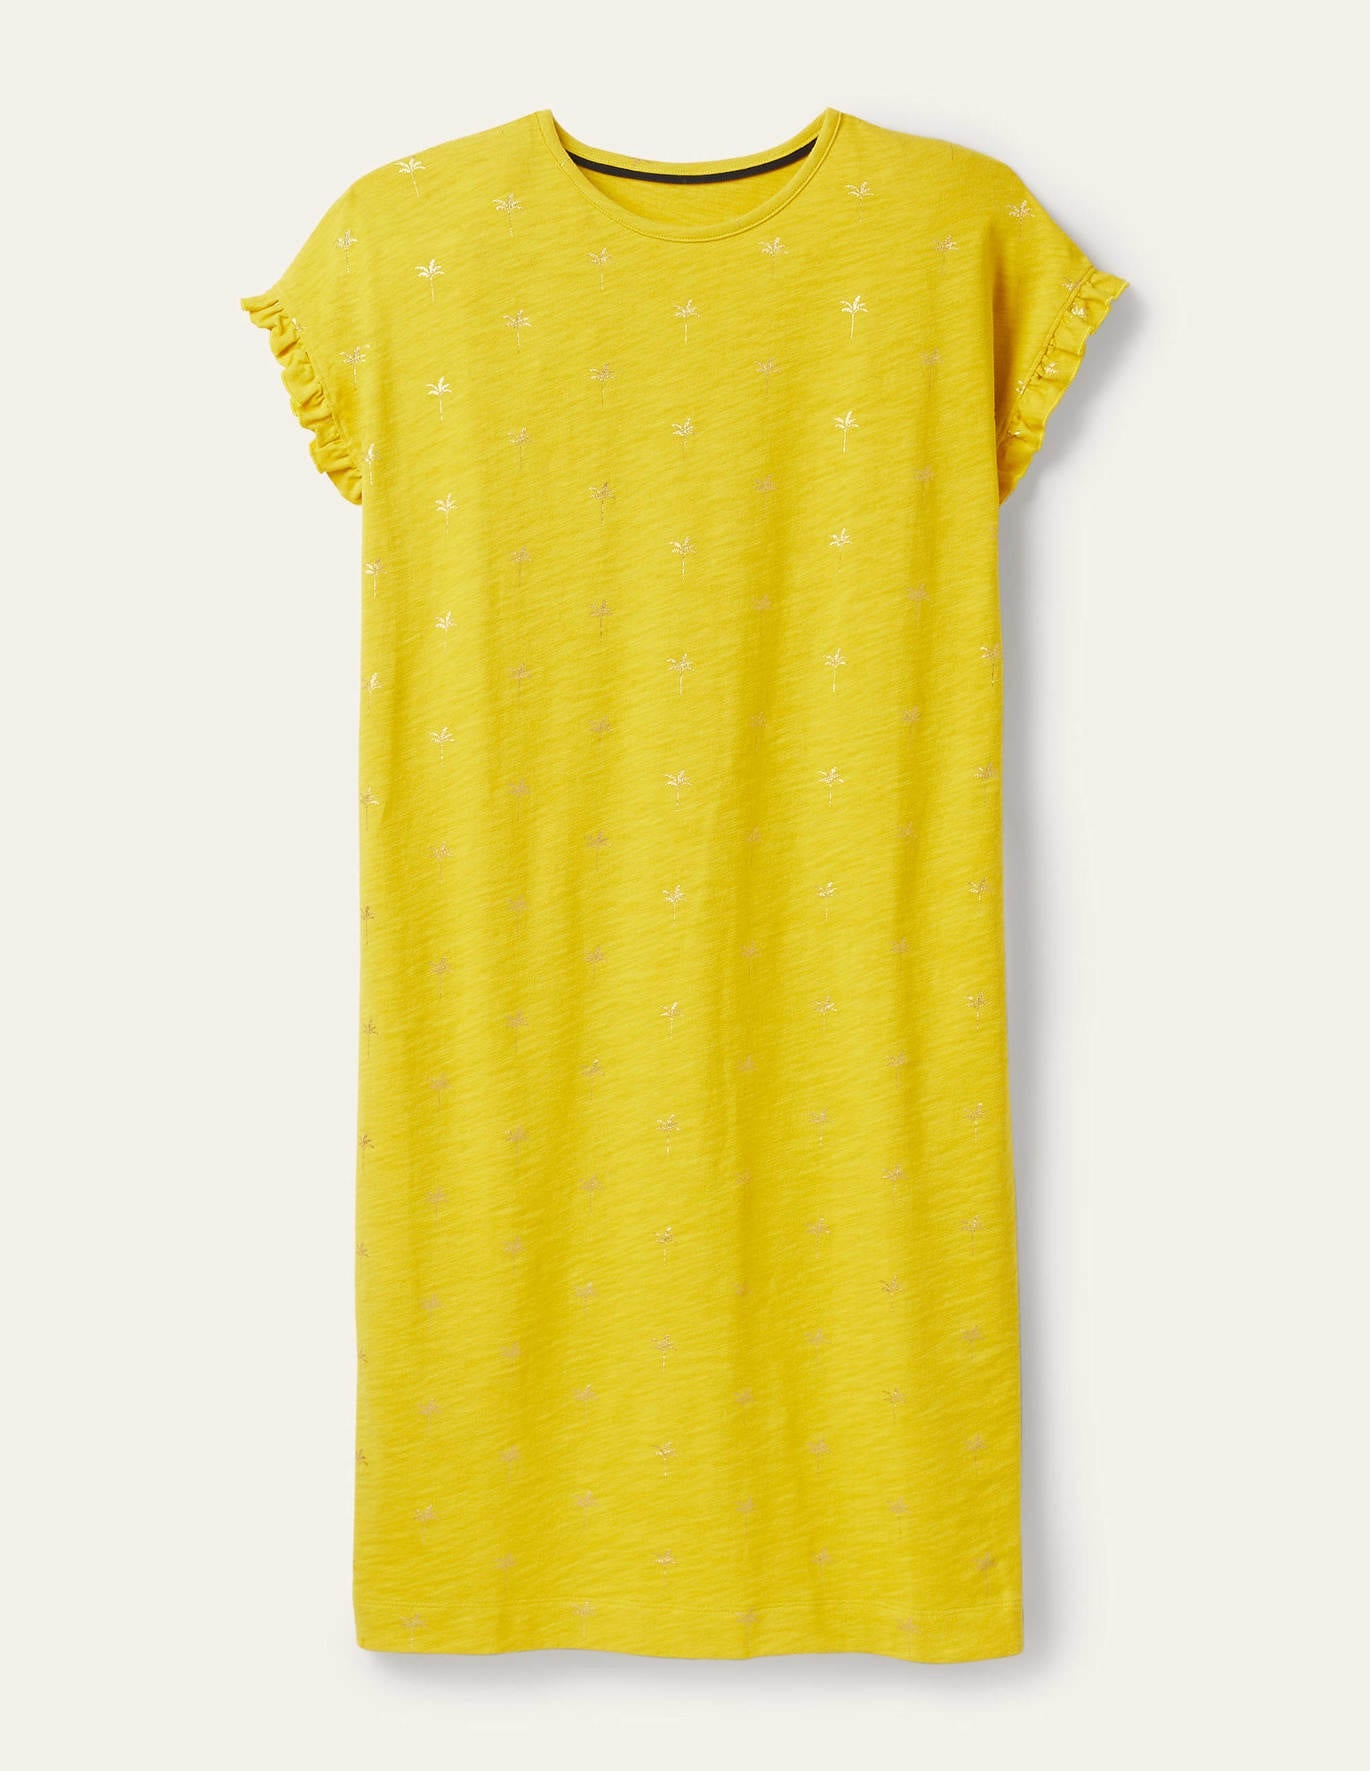 Boden Faye Jersey T-shirt Dress Size 6